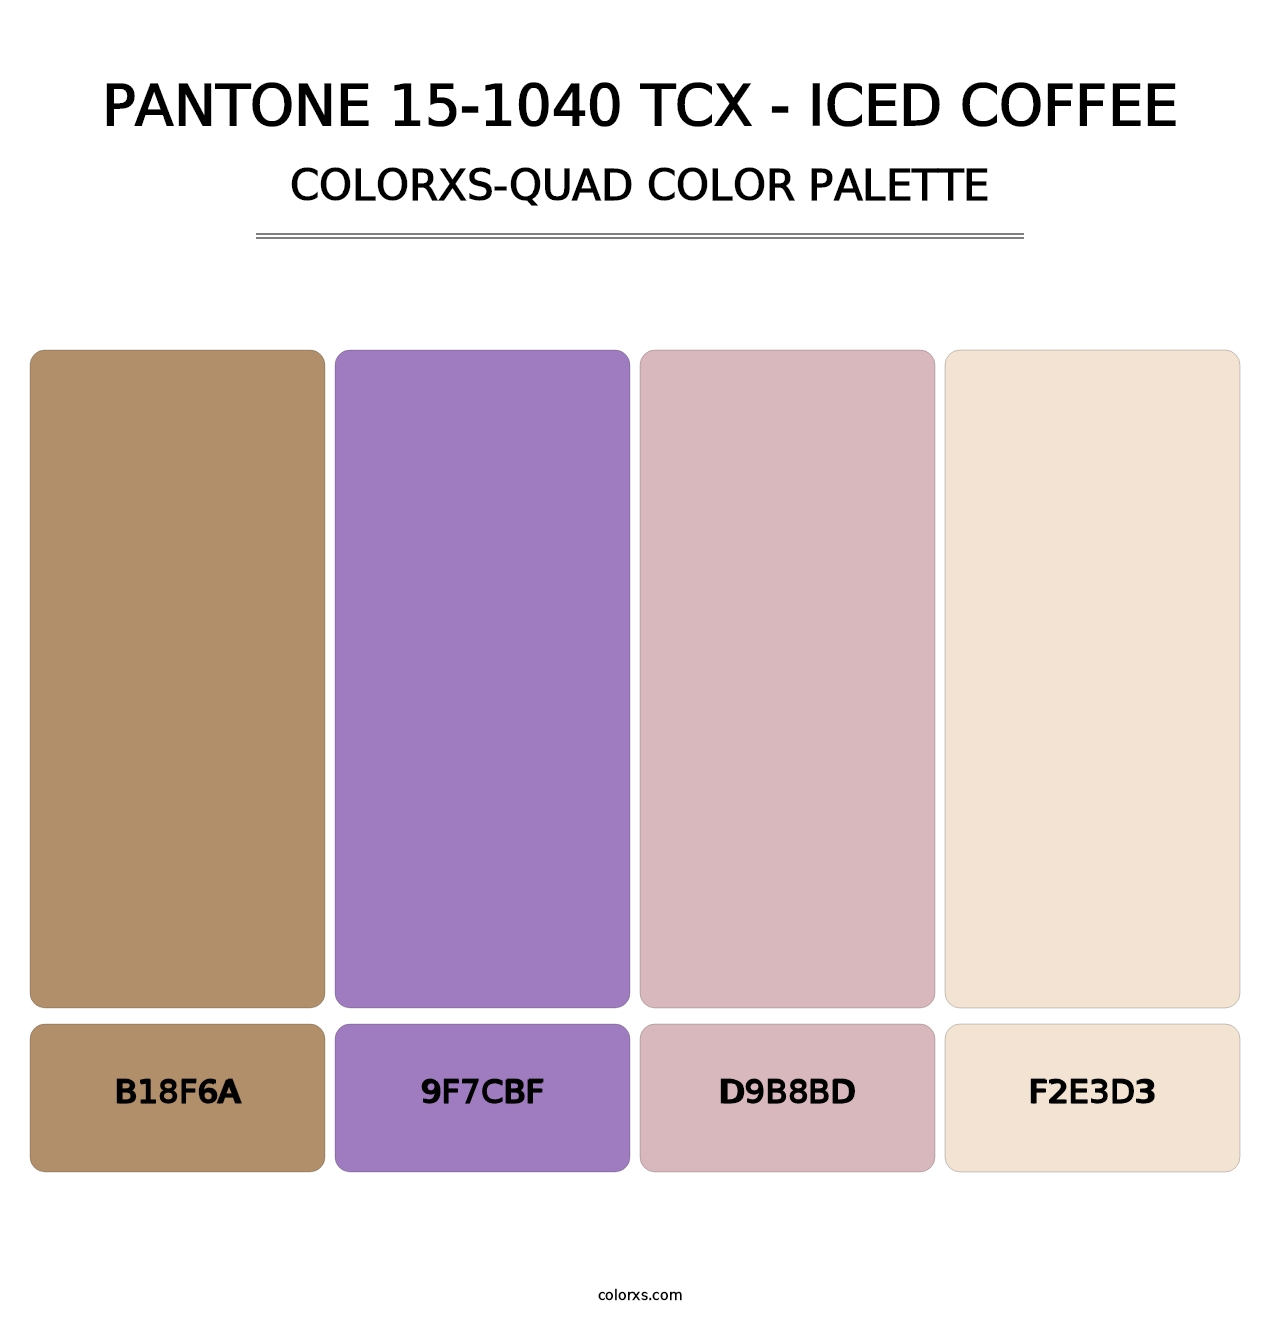 PANTONE 15-1040 TCX - Iced Coffee - Colorxs Quad Palette